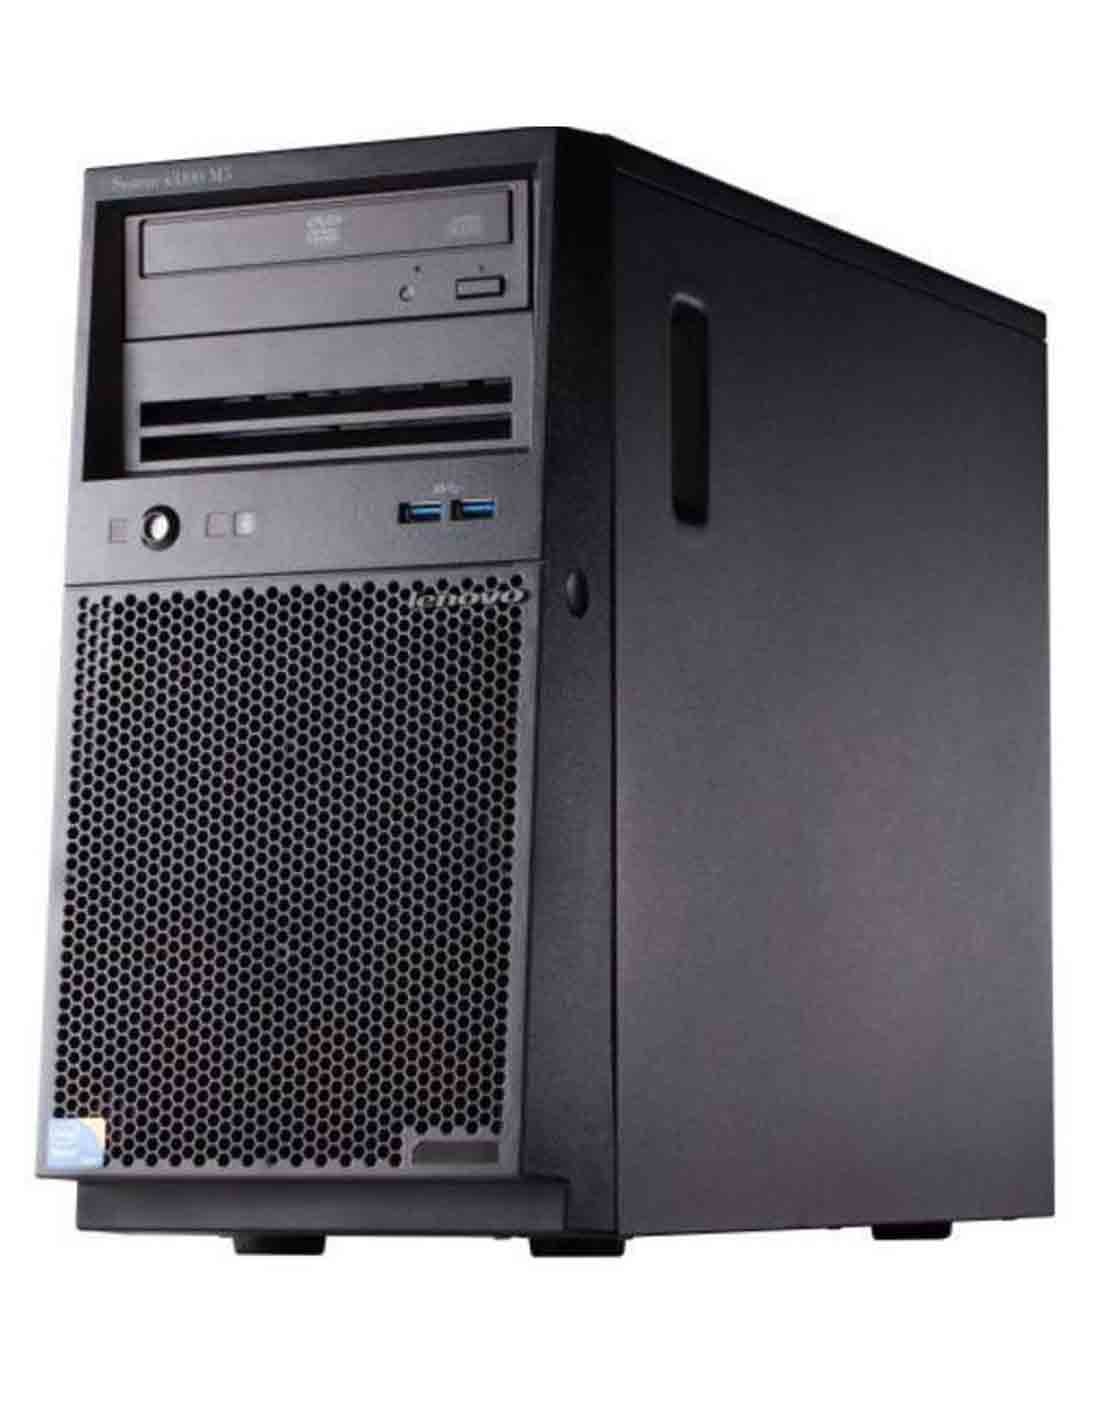 Lenovo x3100 M5 Tower Server E3-1220v3 5457K3G at a Cheap Price in Dubai Online Store